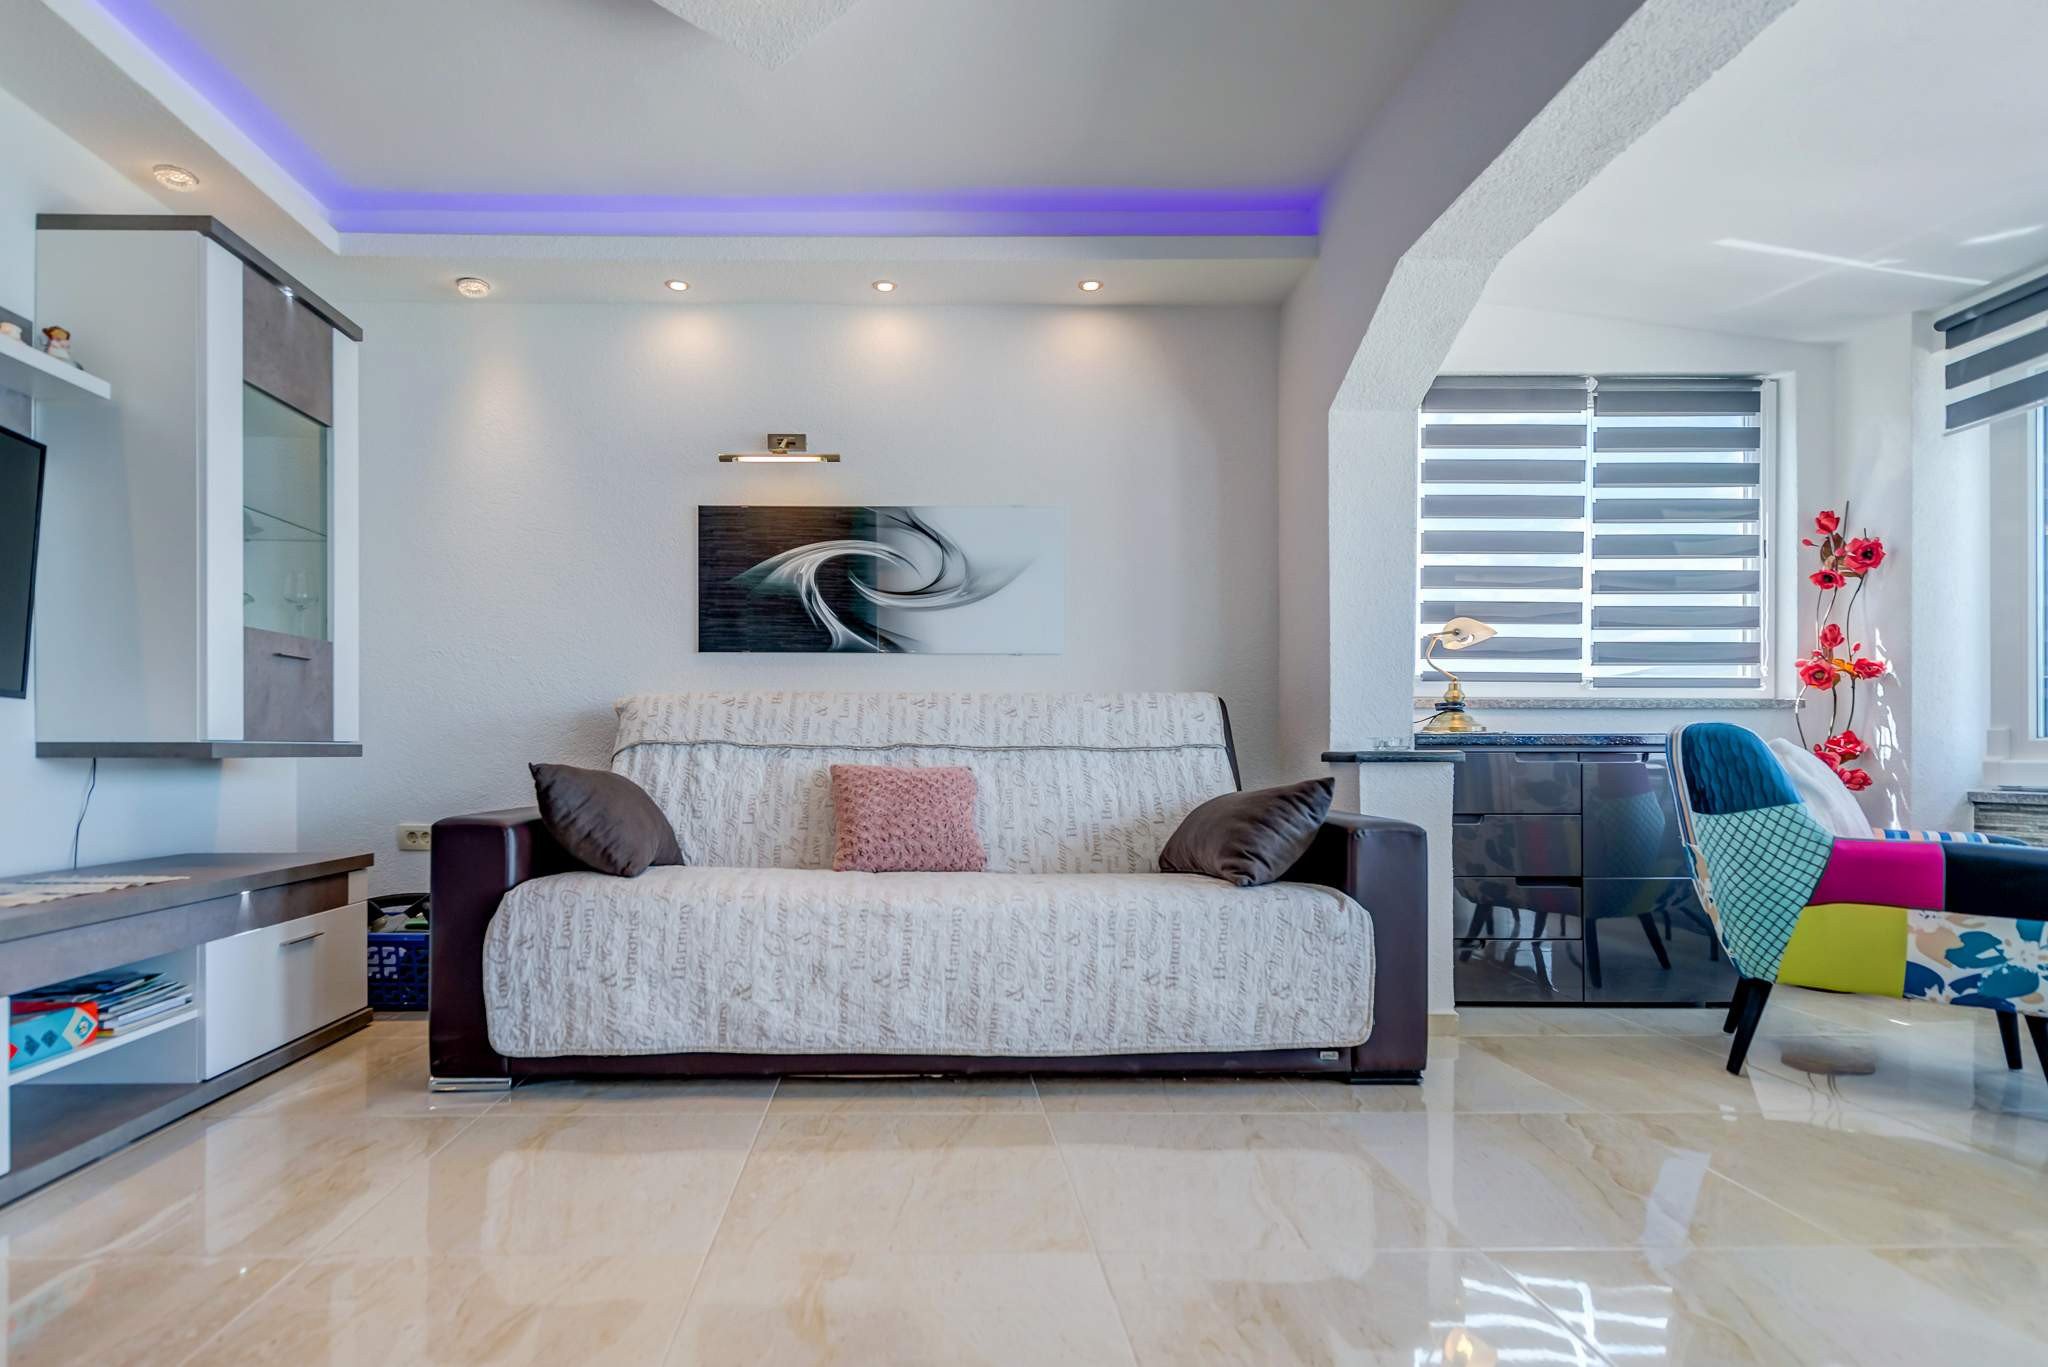 Teal and Gray Bedroom Inspirational 25 Stunning Grey Hardwood Floors Grey Walls